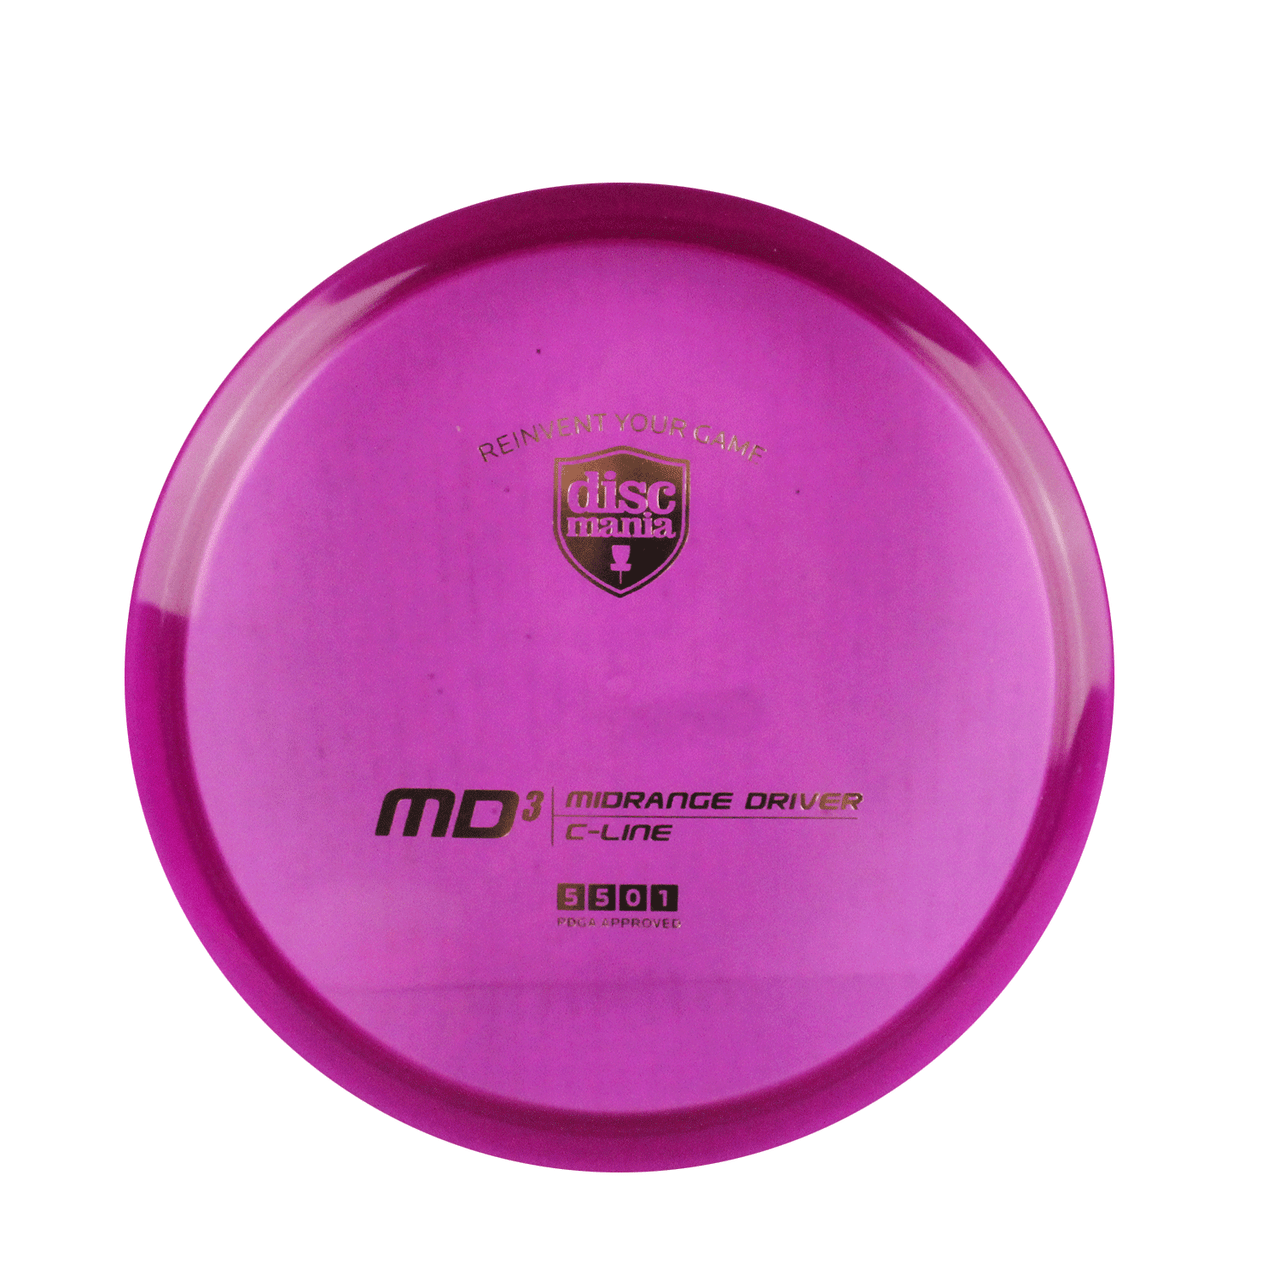 Discmania Disc Golf C-Line MD3 Midrange Driver Purple/Gold 177 grams